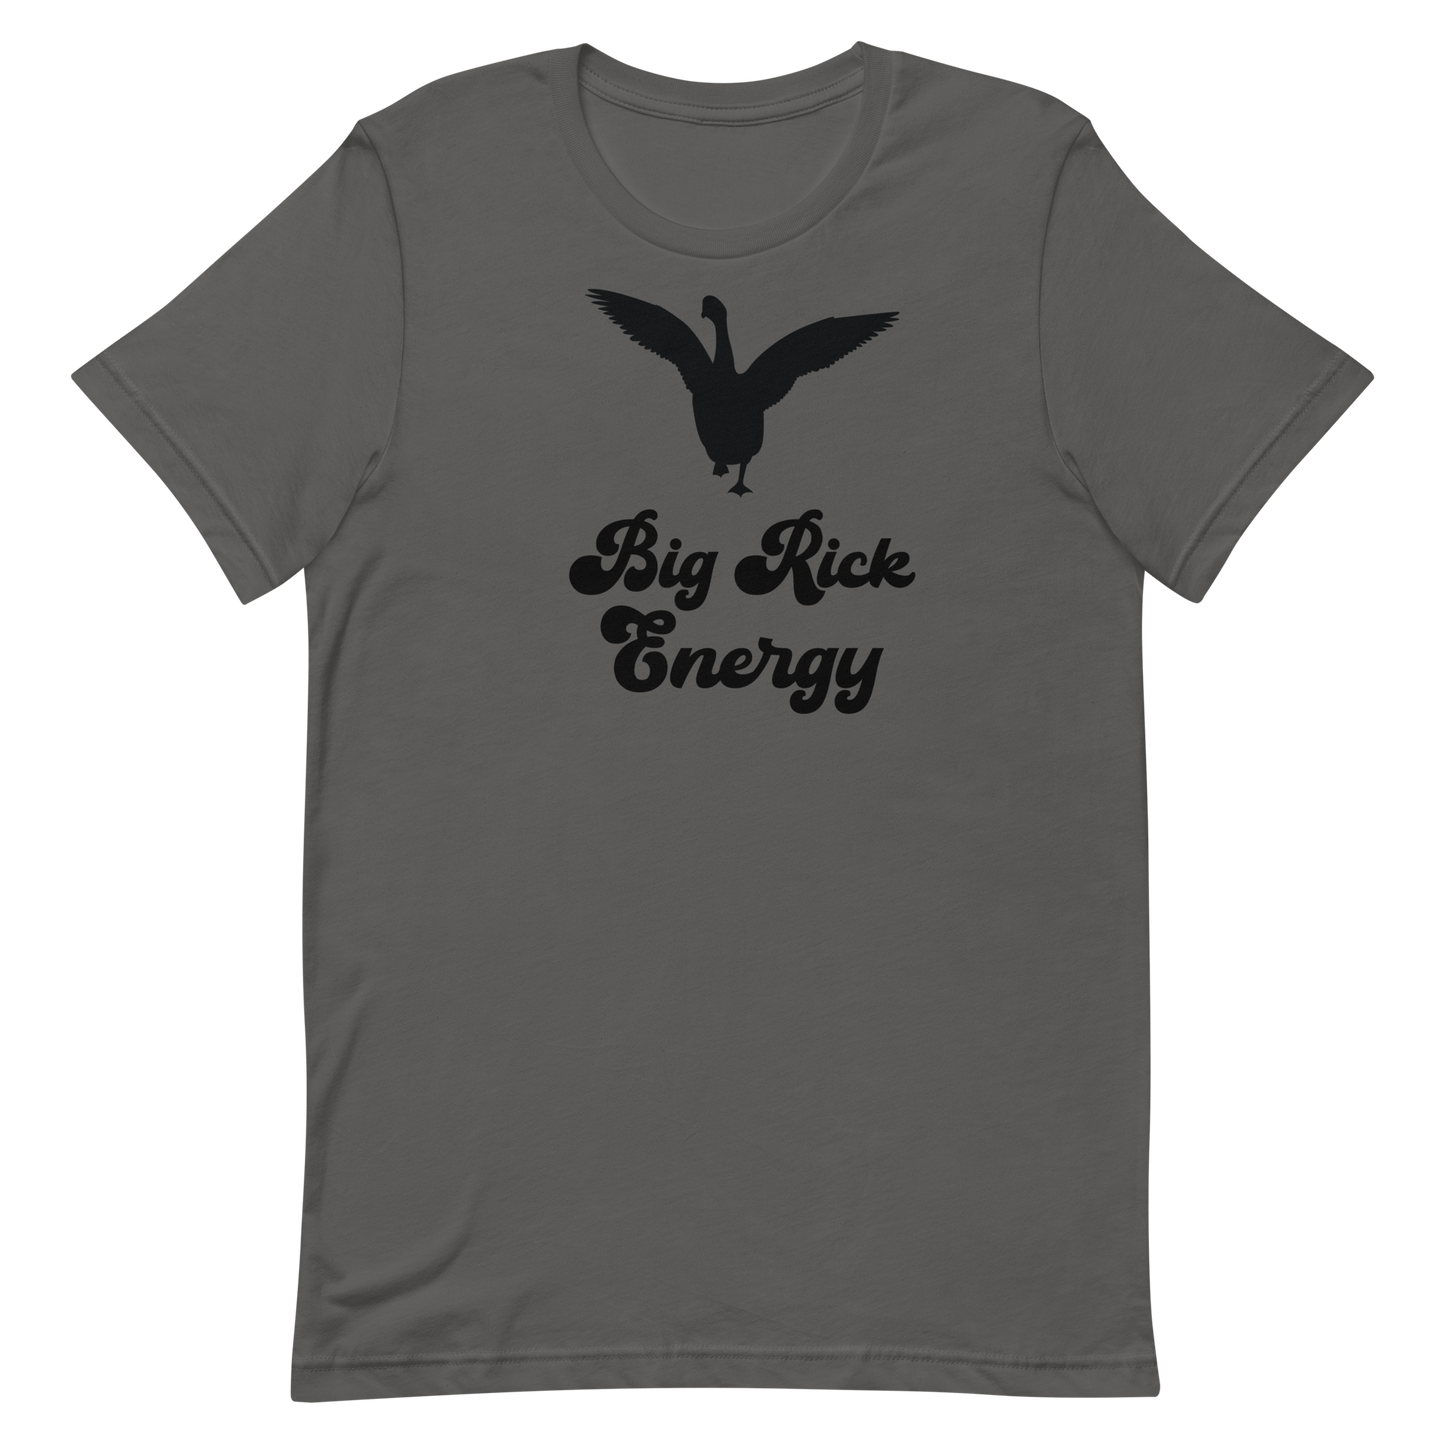 Big Rick Energy t-shirt